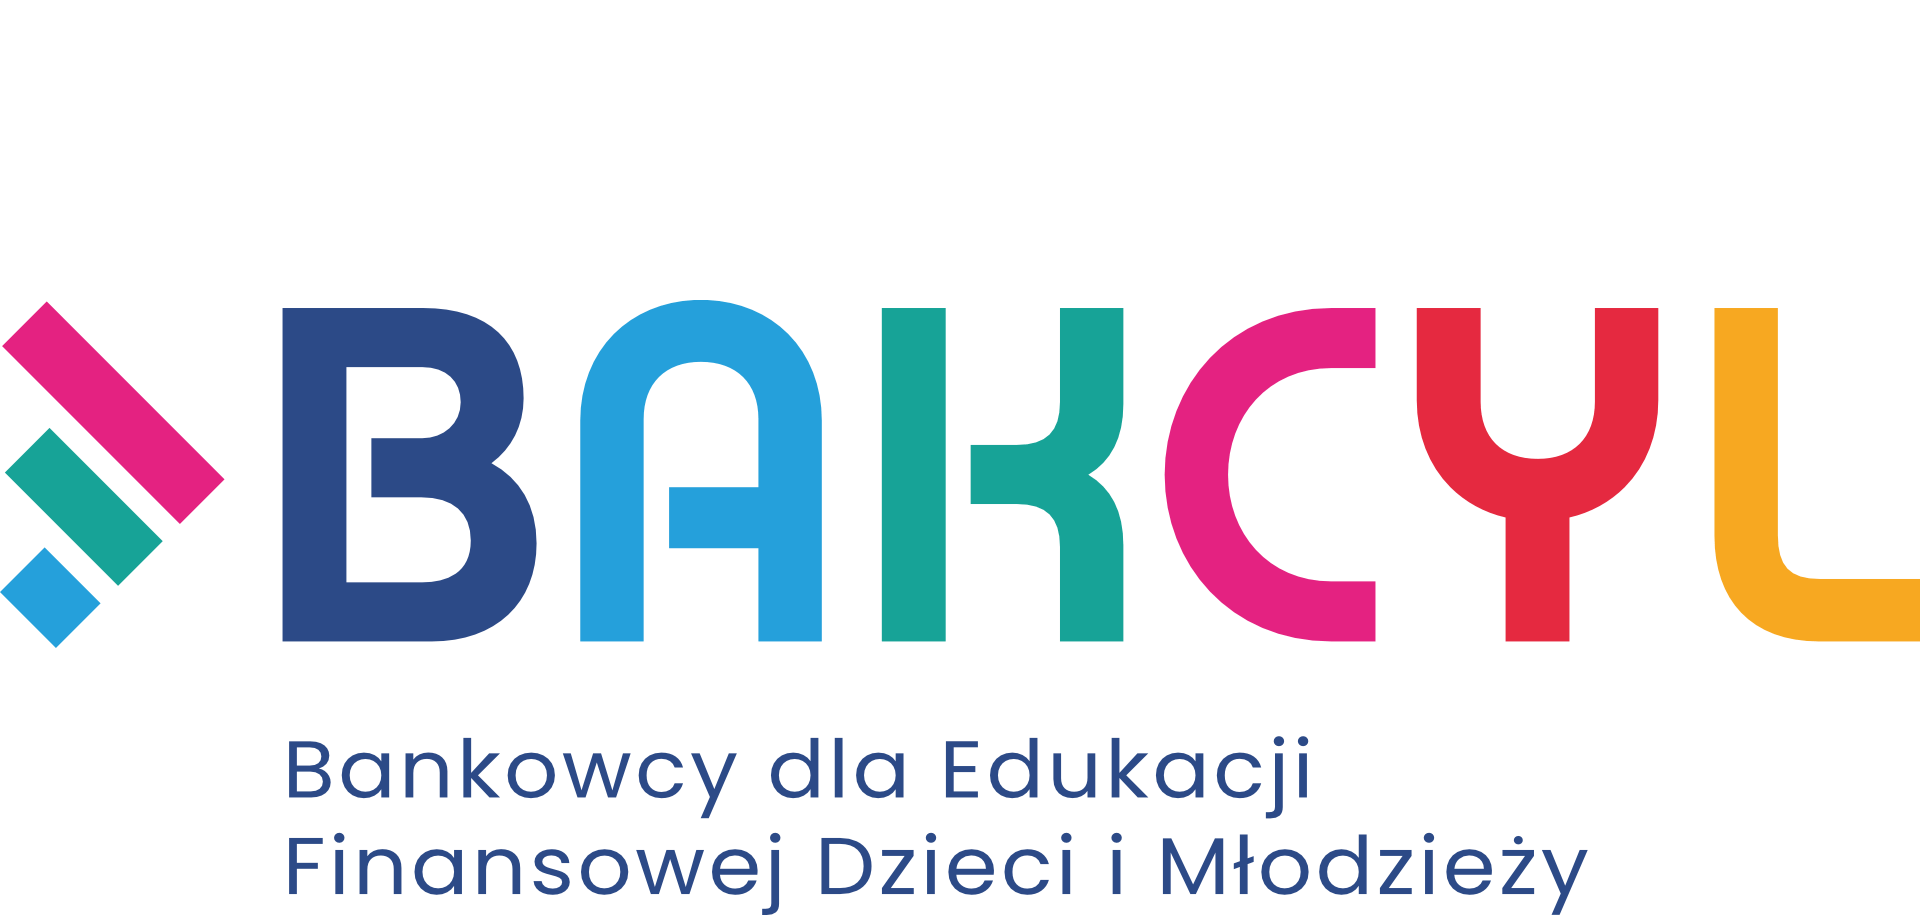 BAKCYL logo